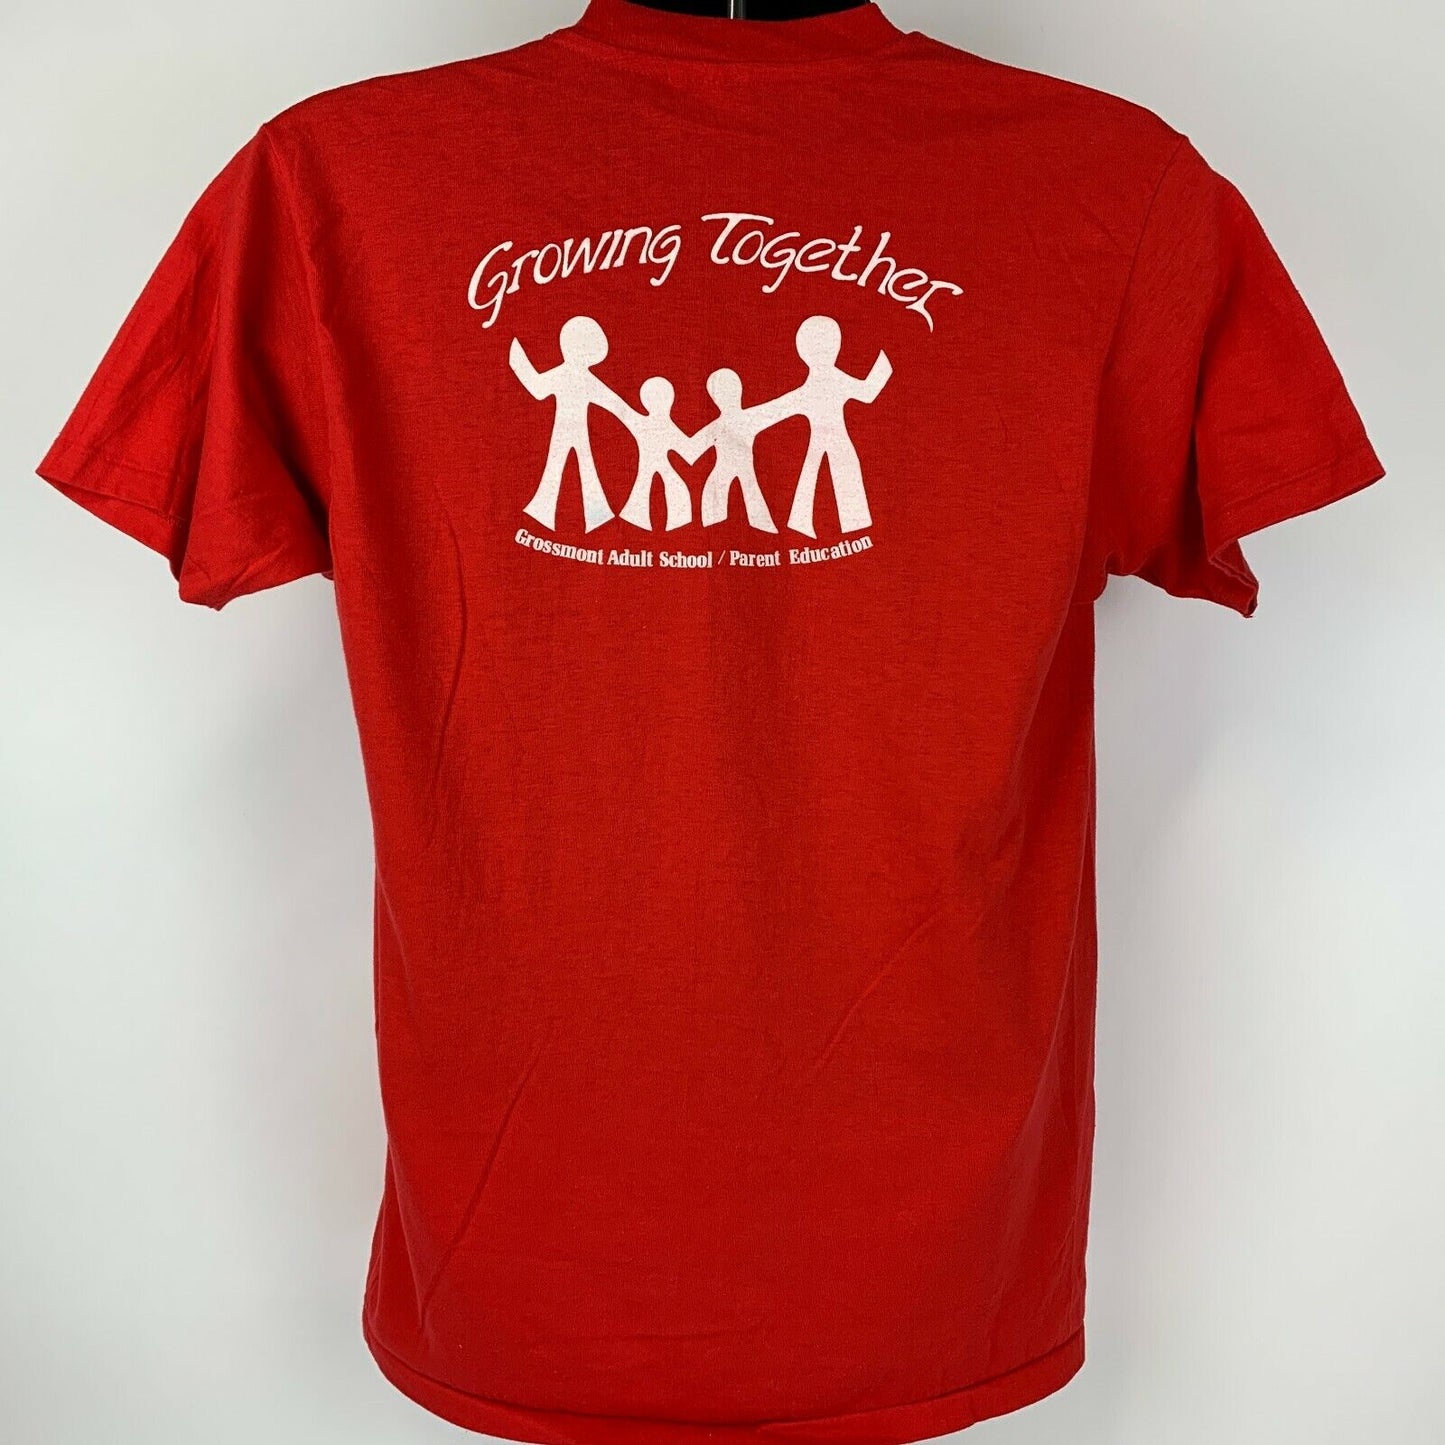 Grossmont Adult School Vintage 80s T Shirt Medium El Cajon California USA Made